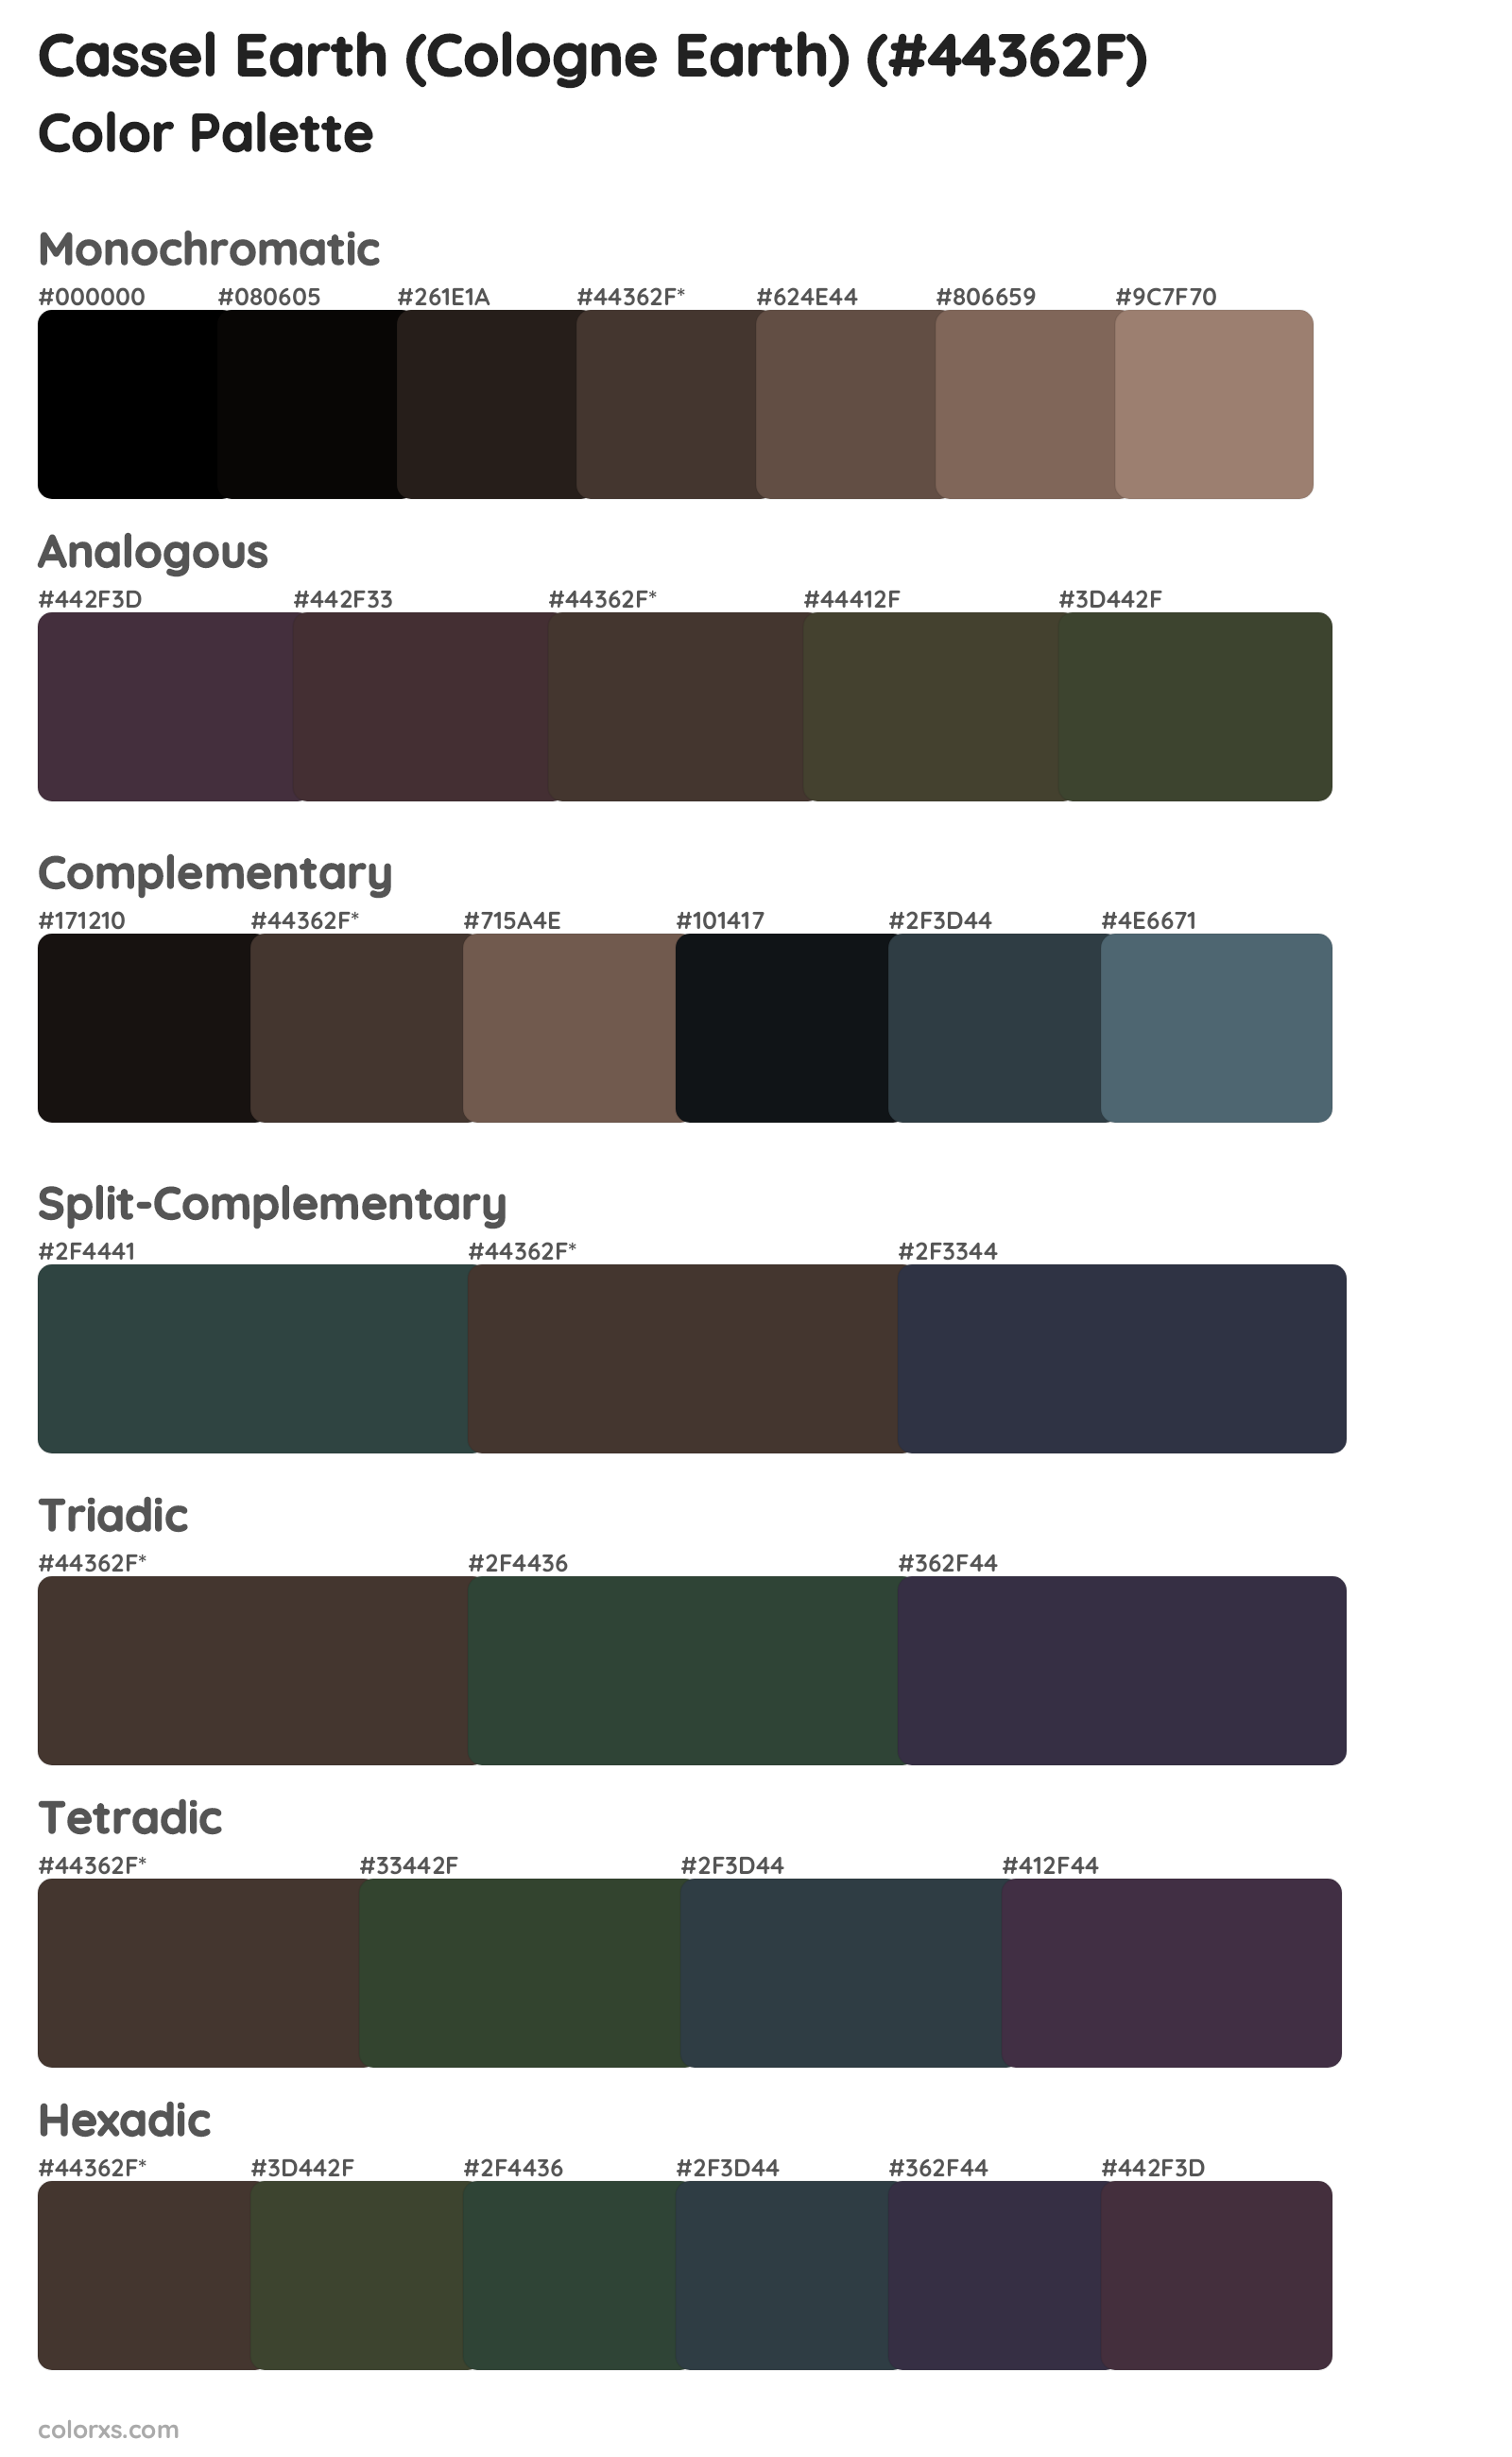 Cassel Earth (Cologne Earth) Color Scheme Palettes